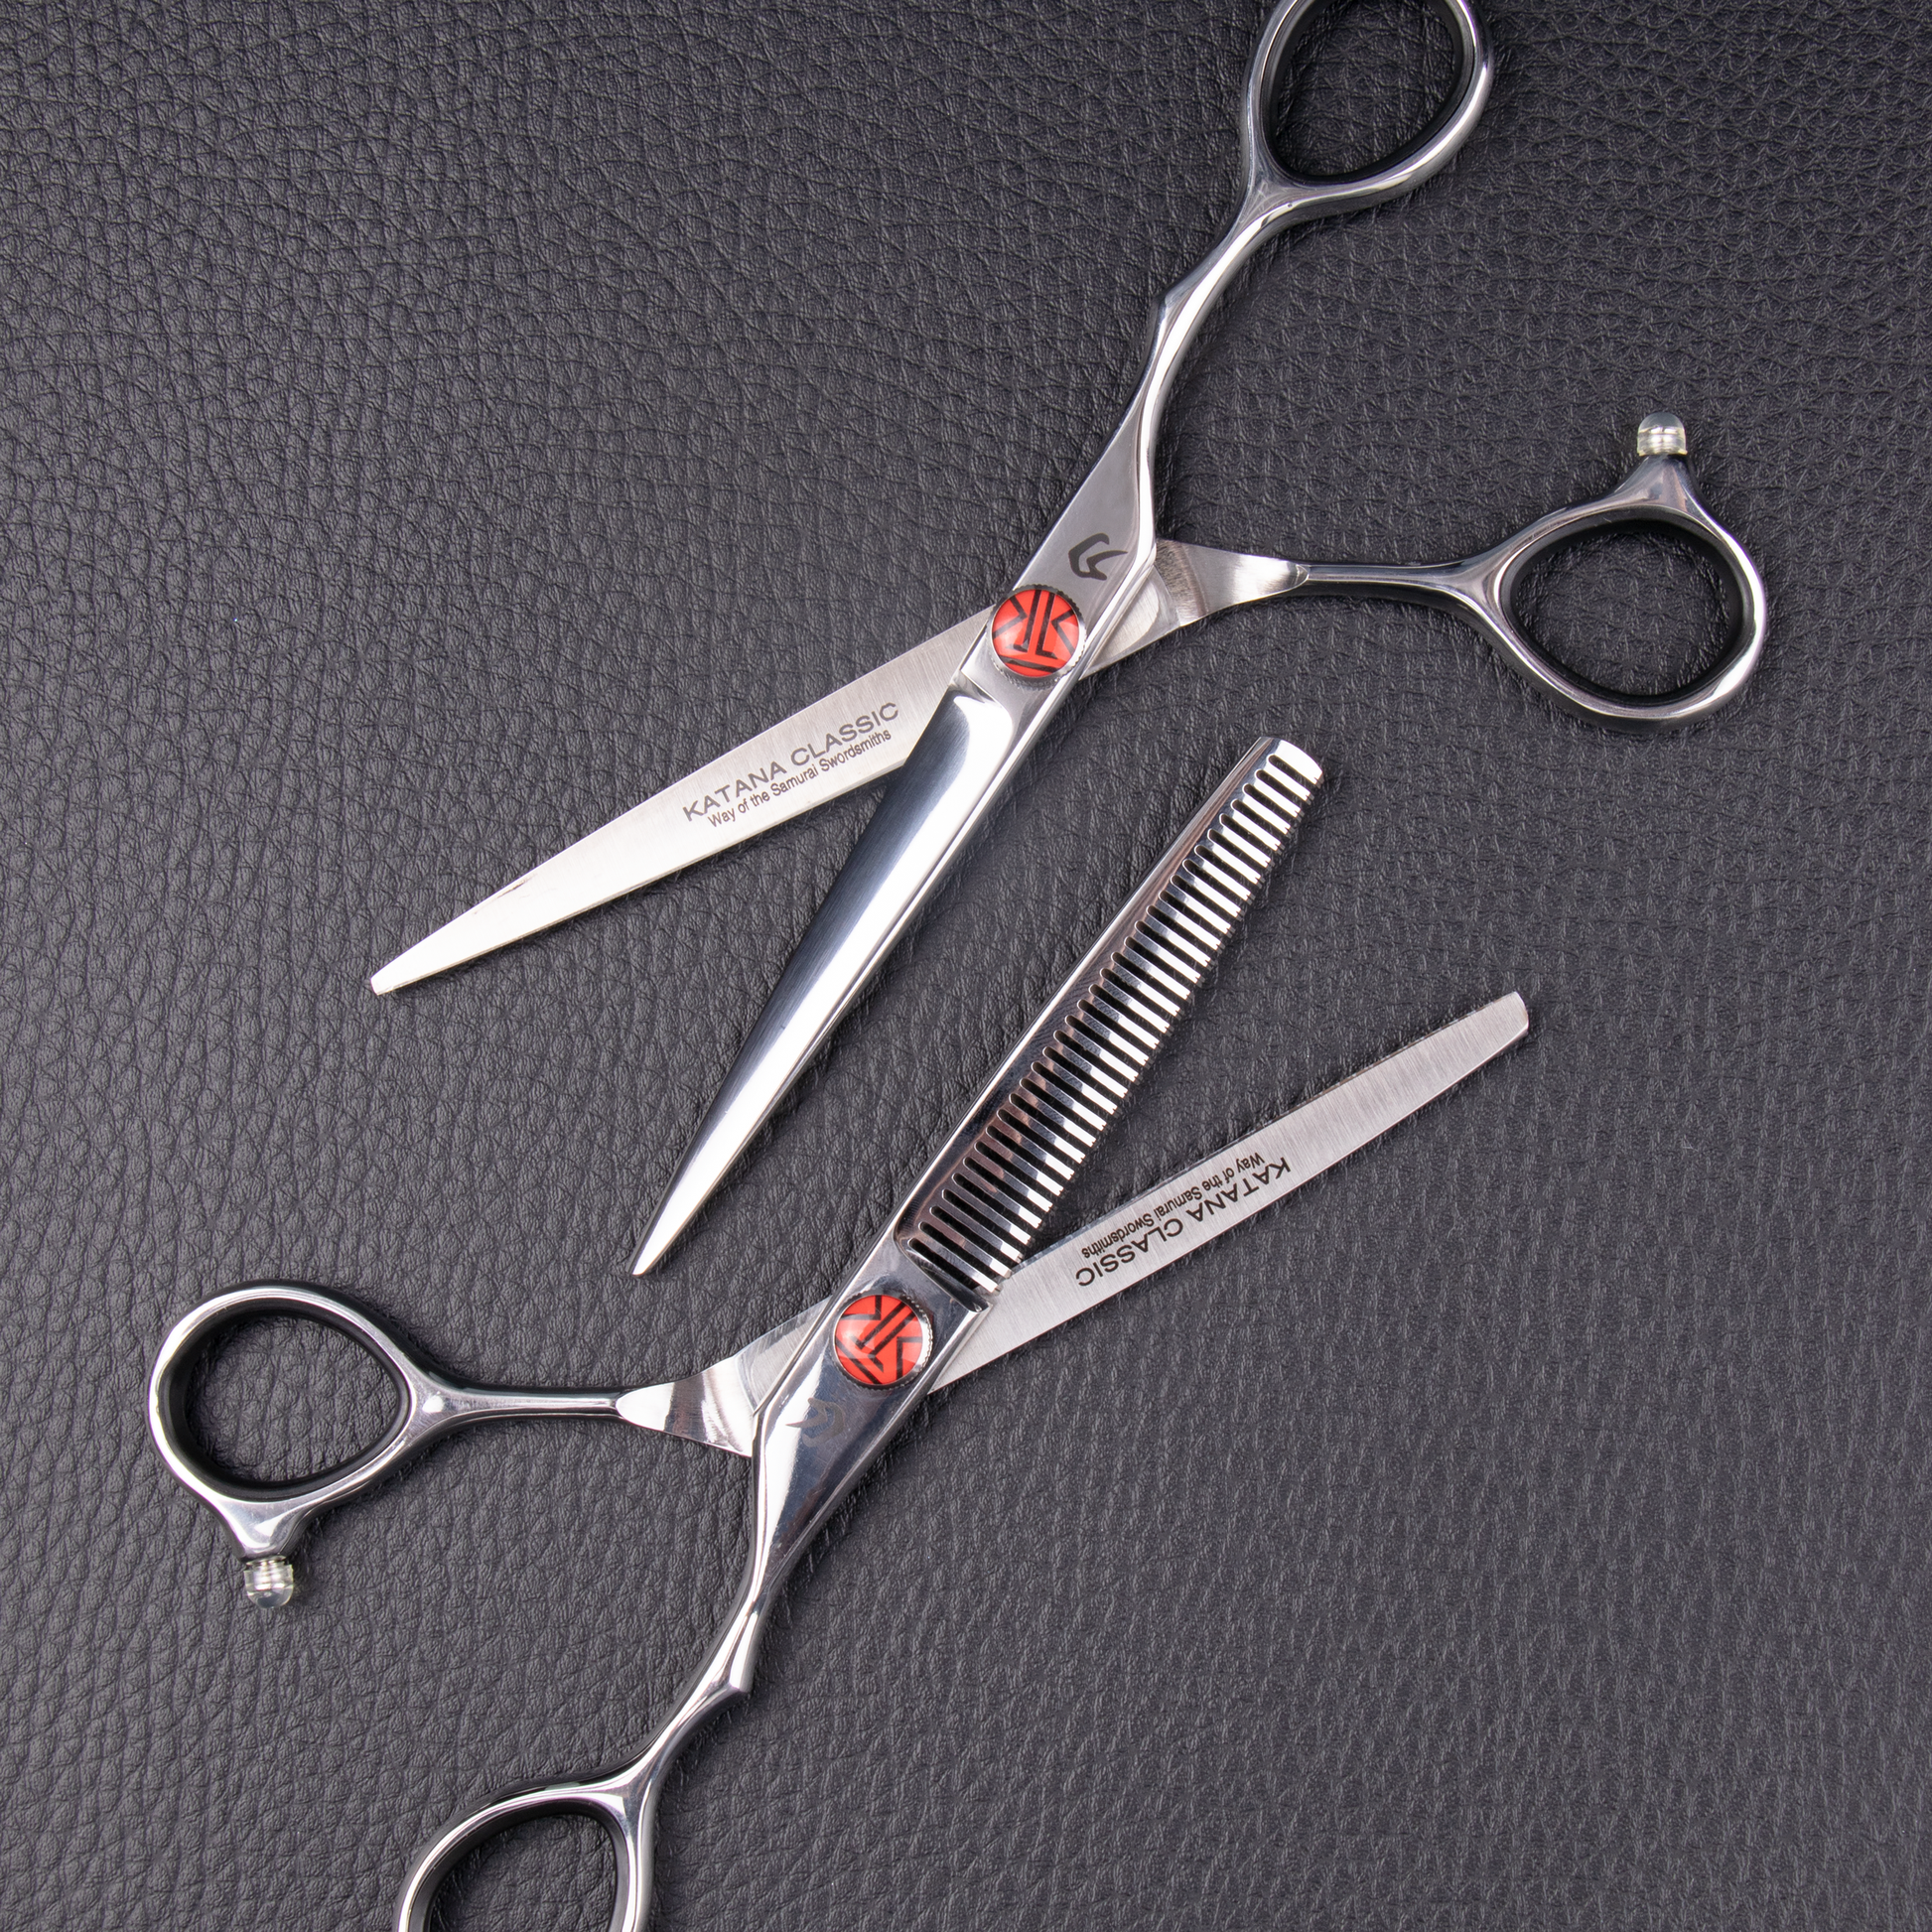 Japanese Metal Cutting Scissors SK11 Blade Japan